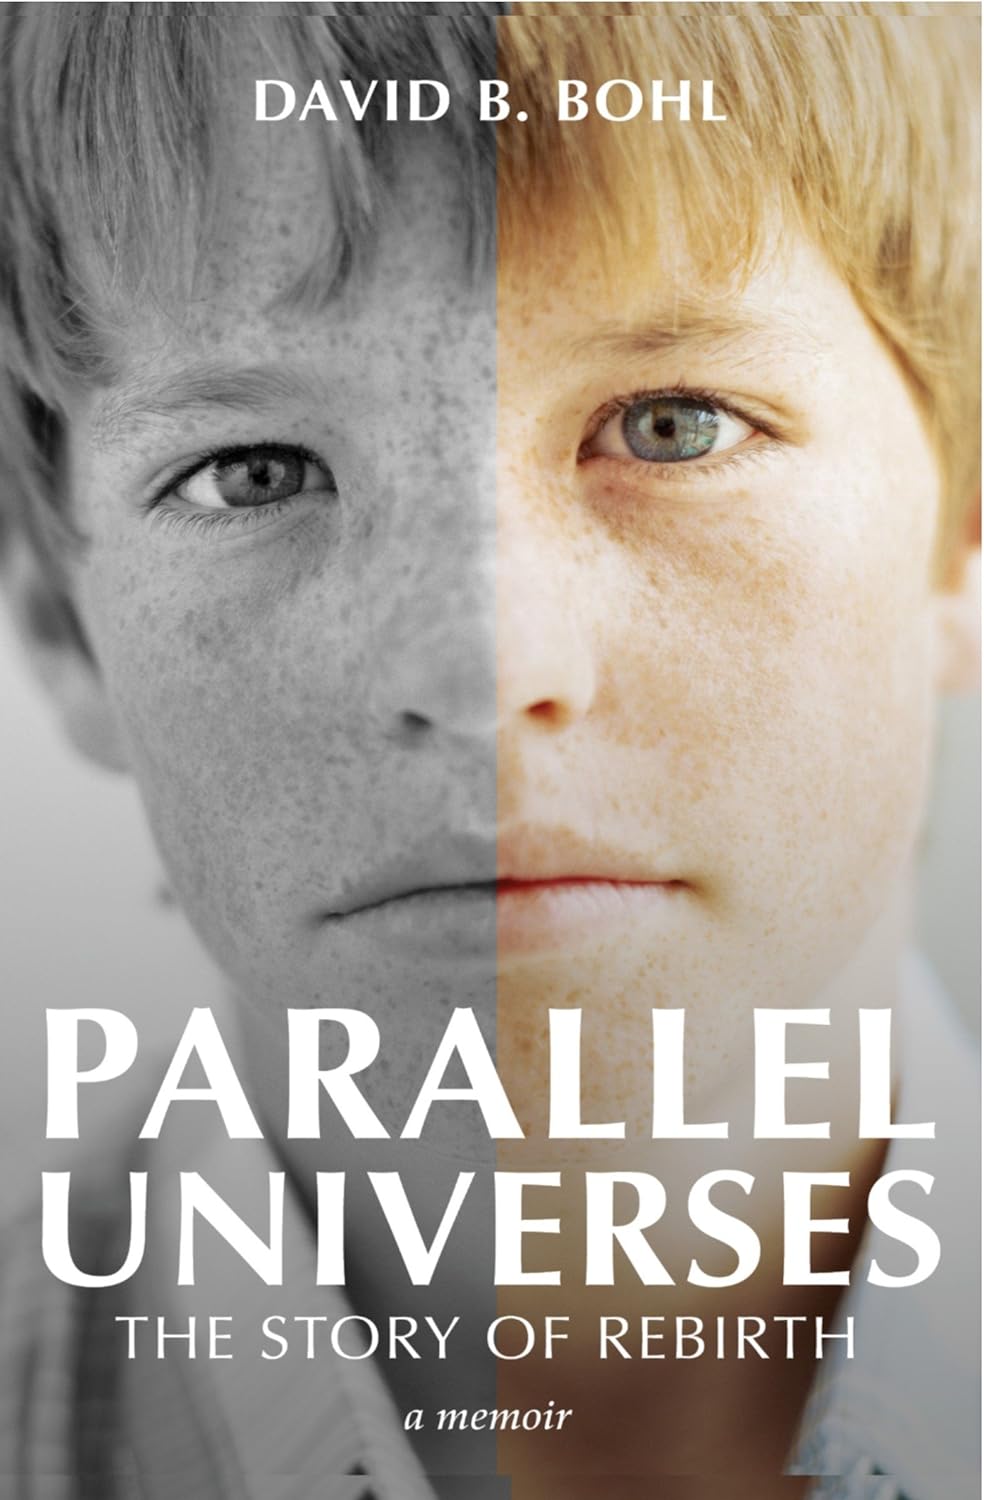 Parallel Universes by David B. Bohl